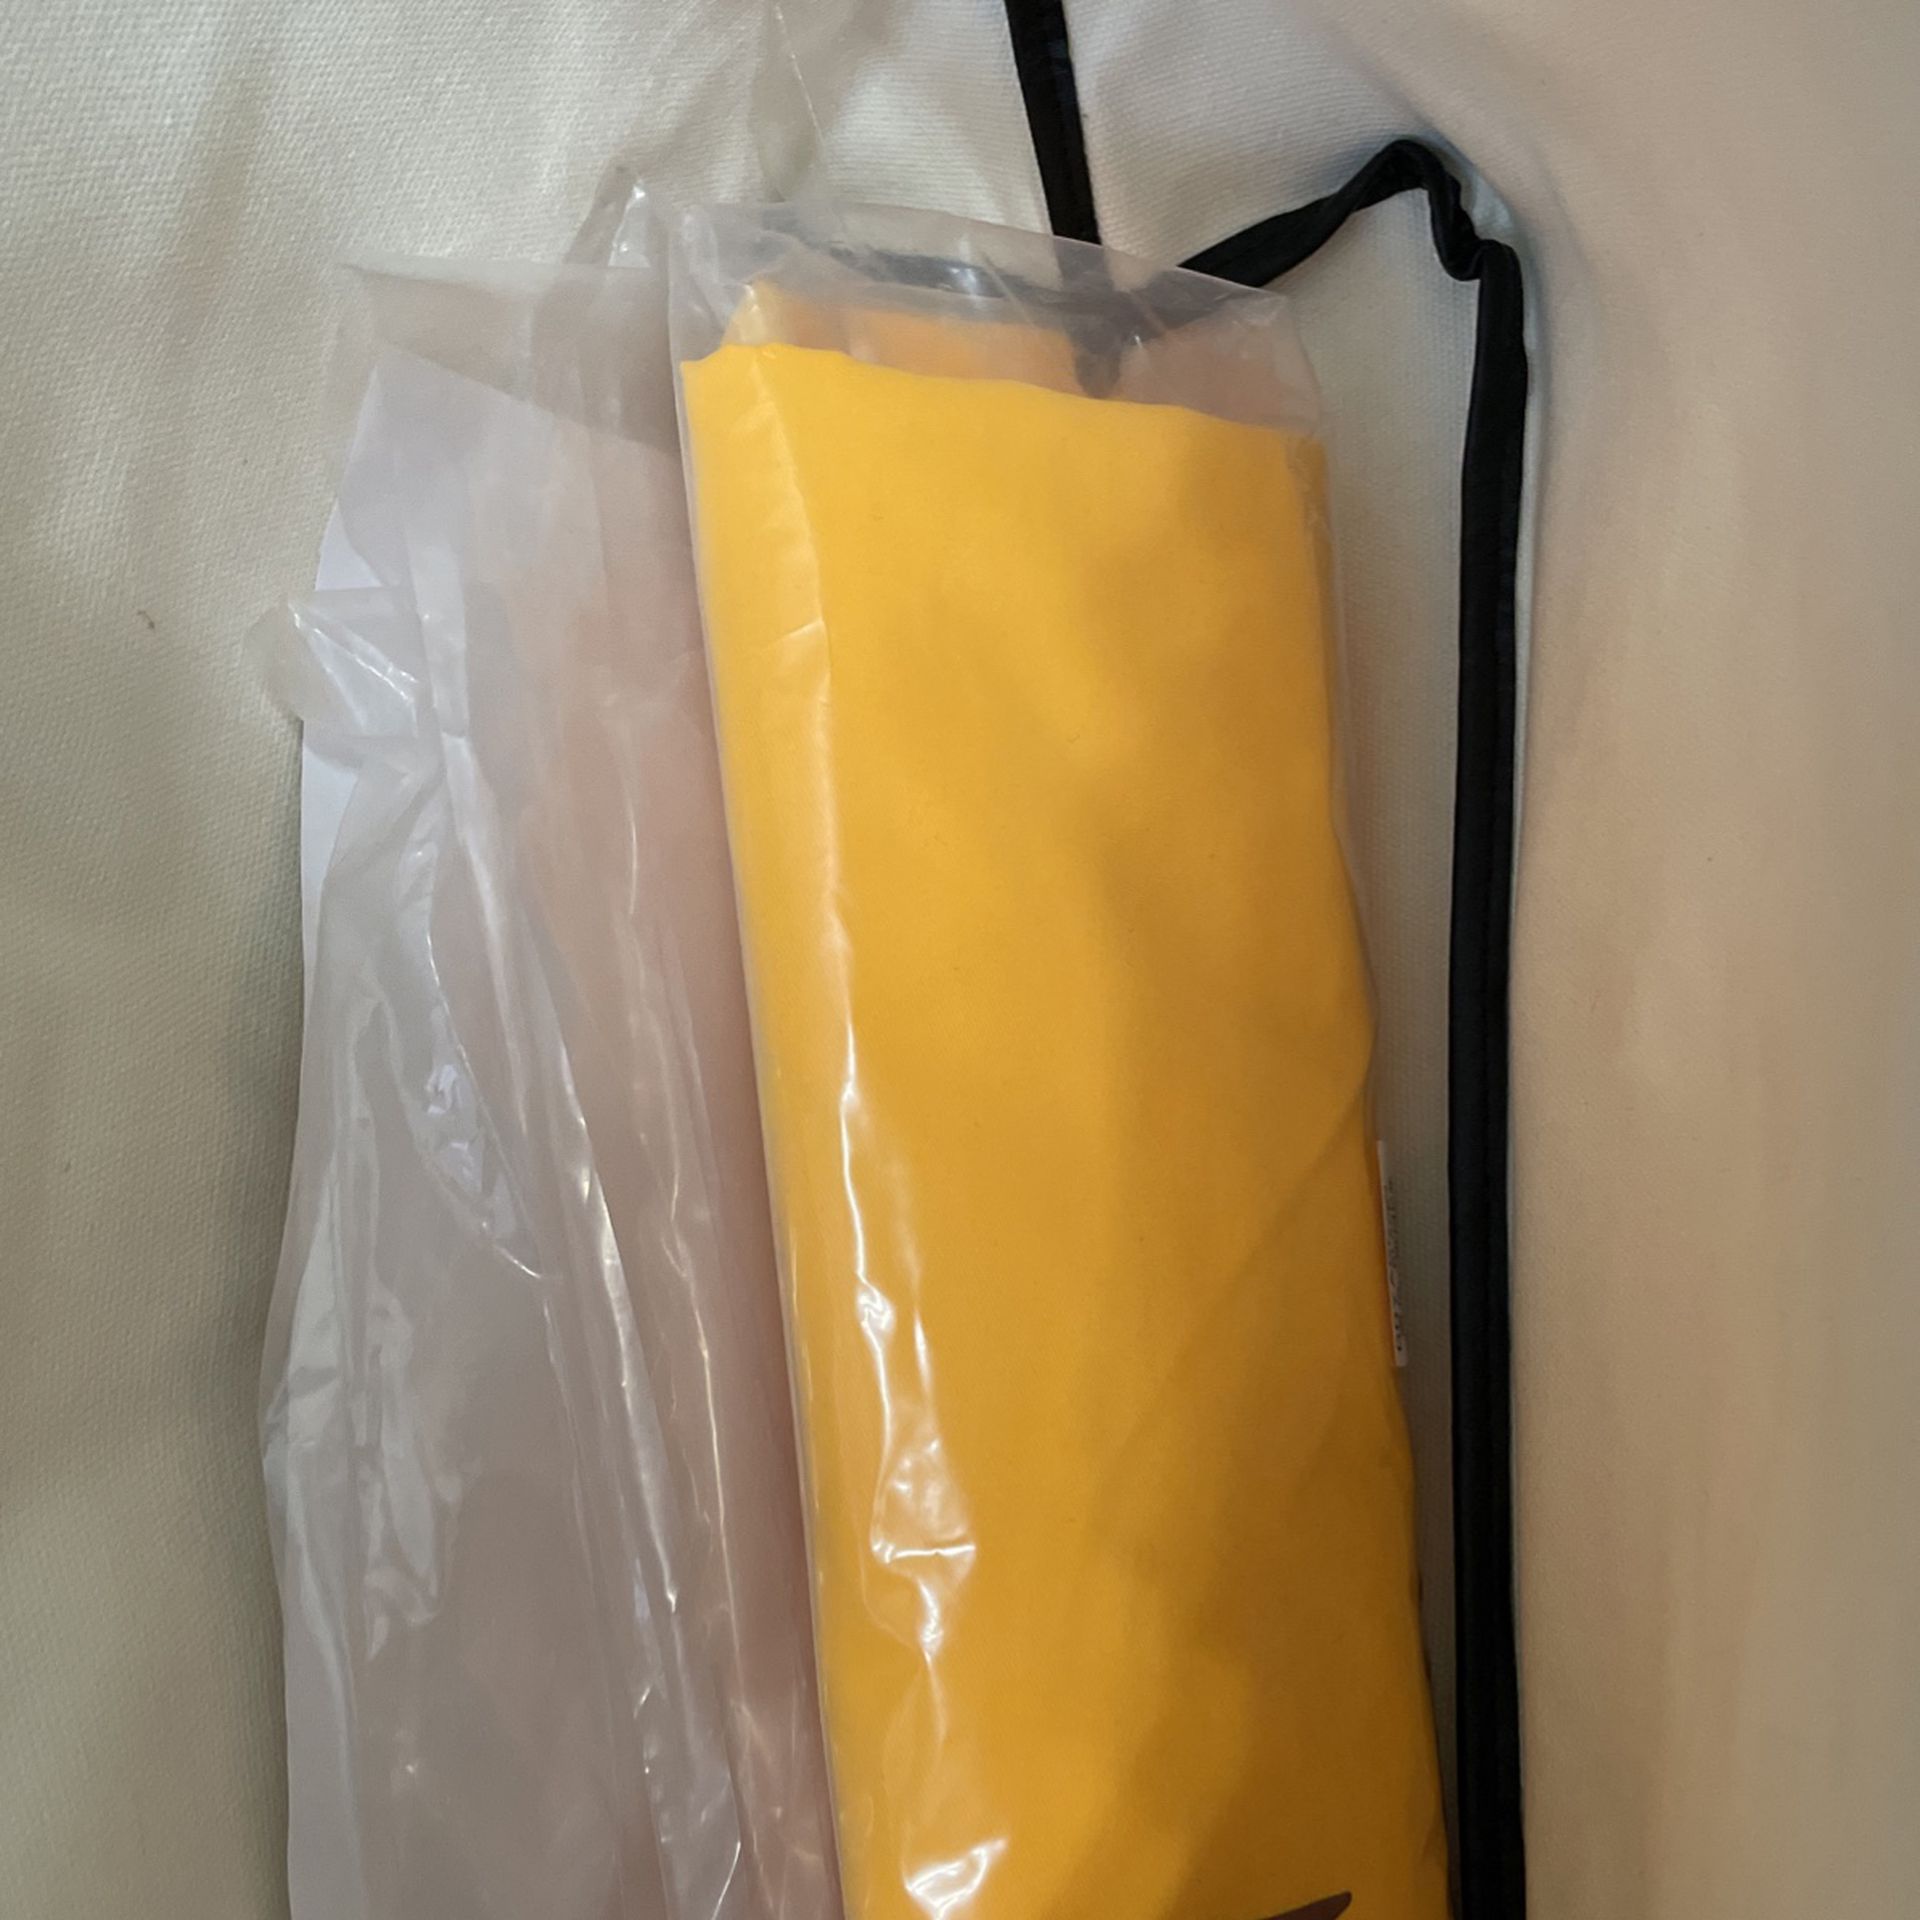 Khaki Tote Shopping Bag Goyard Women Men for Sale in Tustin, CA - OfferUp